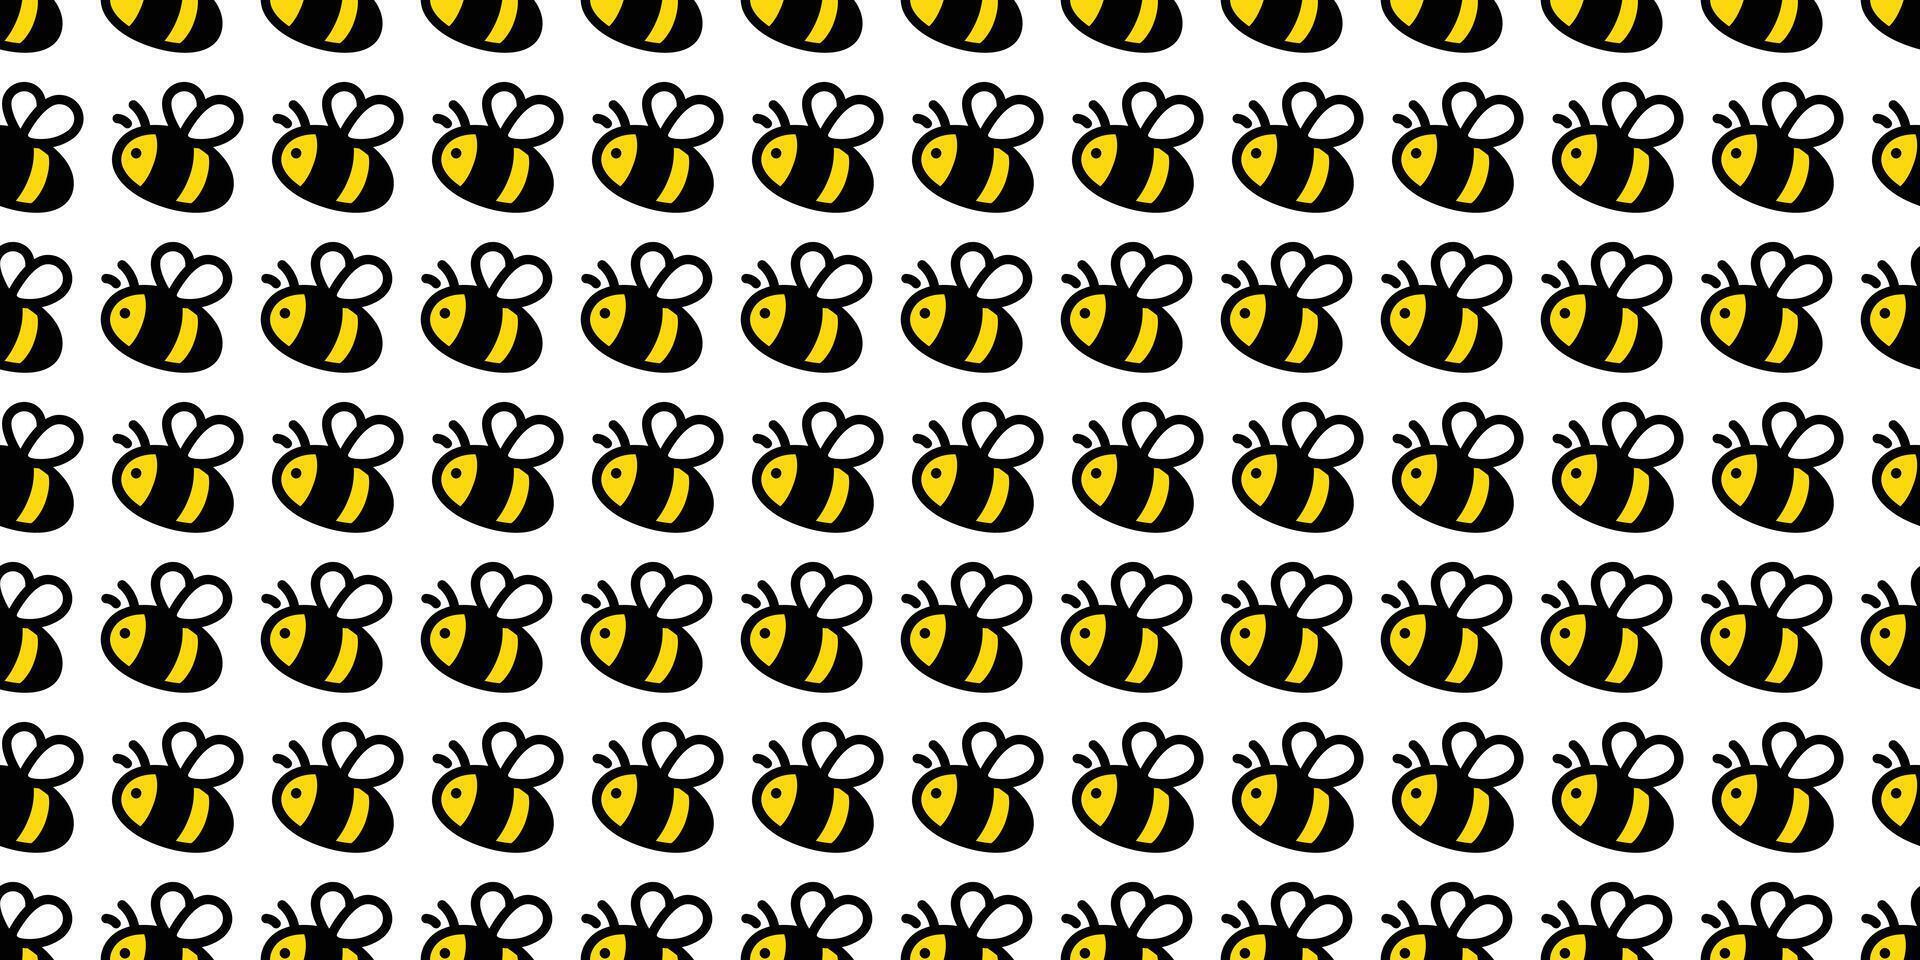 miel abeja sin costura modelo panal dibujos animados loseta antecedentes repetir fondo de pantalla ilustración bufanda aislado garabatear textil diseño vector